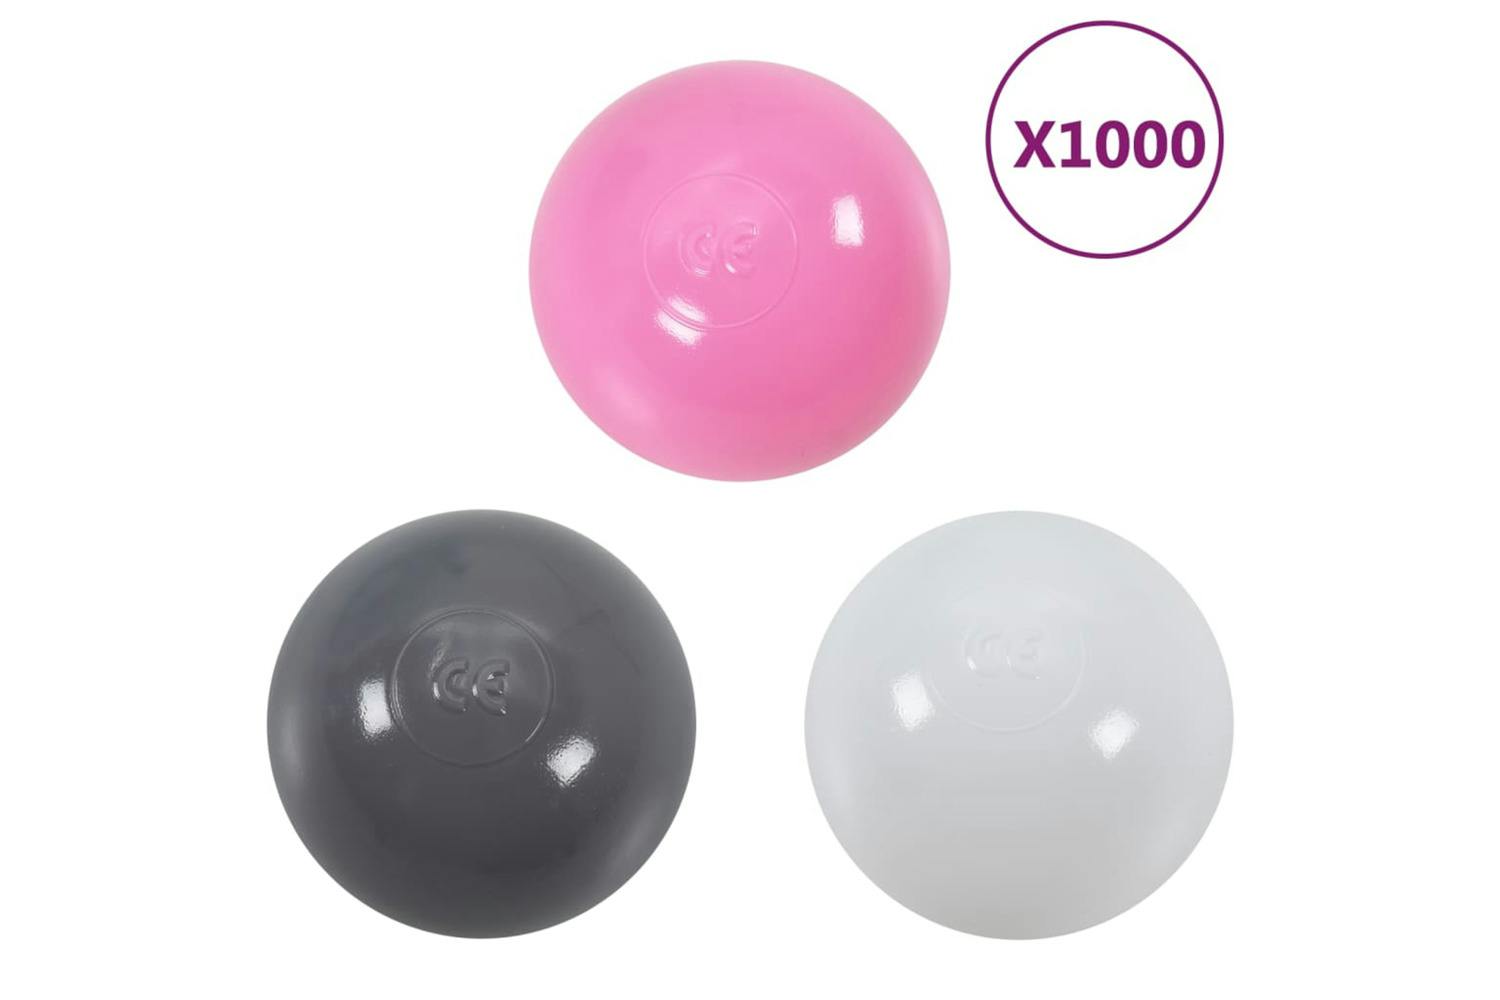 Vidaxl 3102955 Colourful Playballs For Baby Pool 1000 Pcs